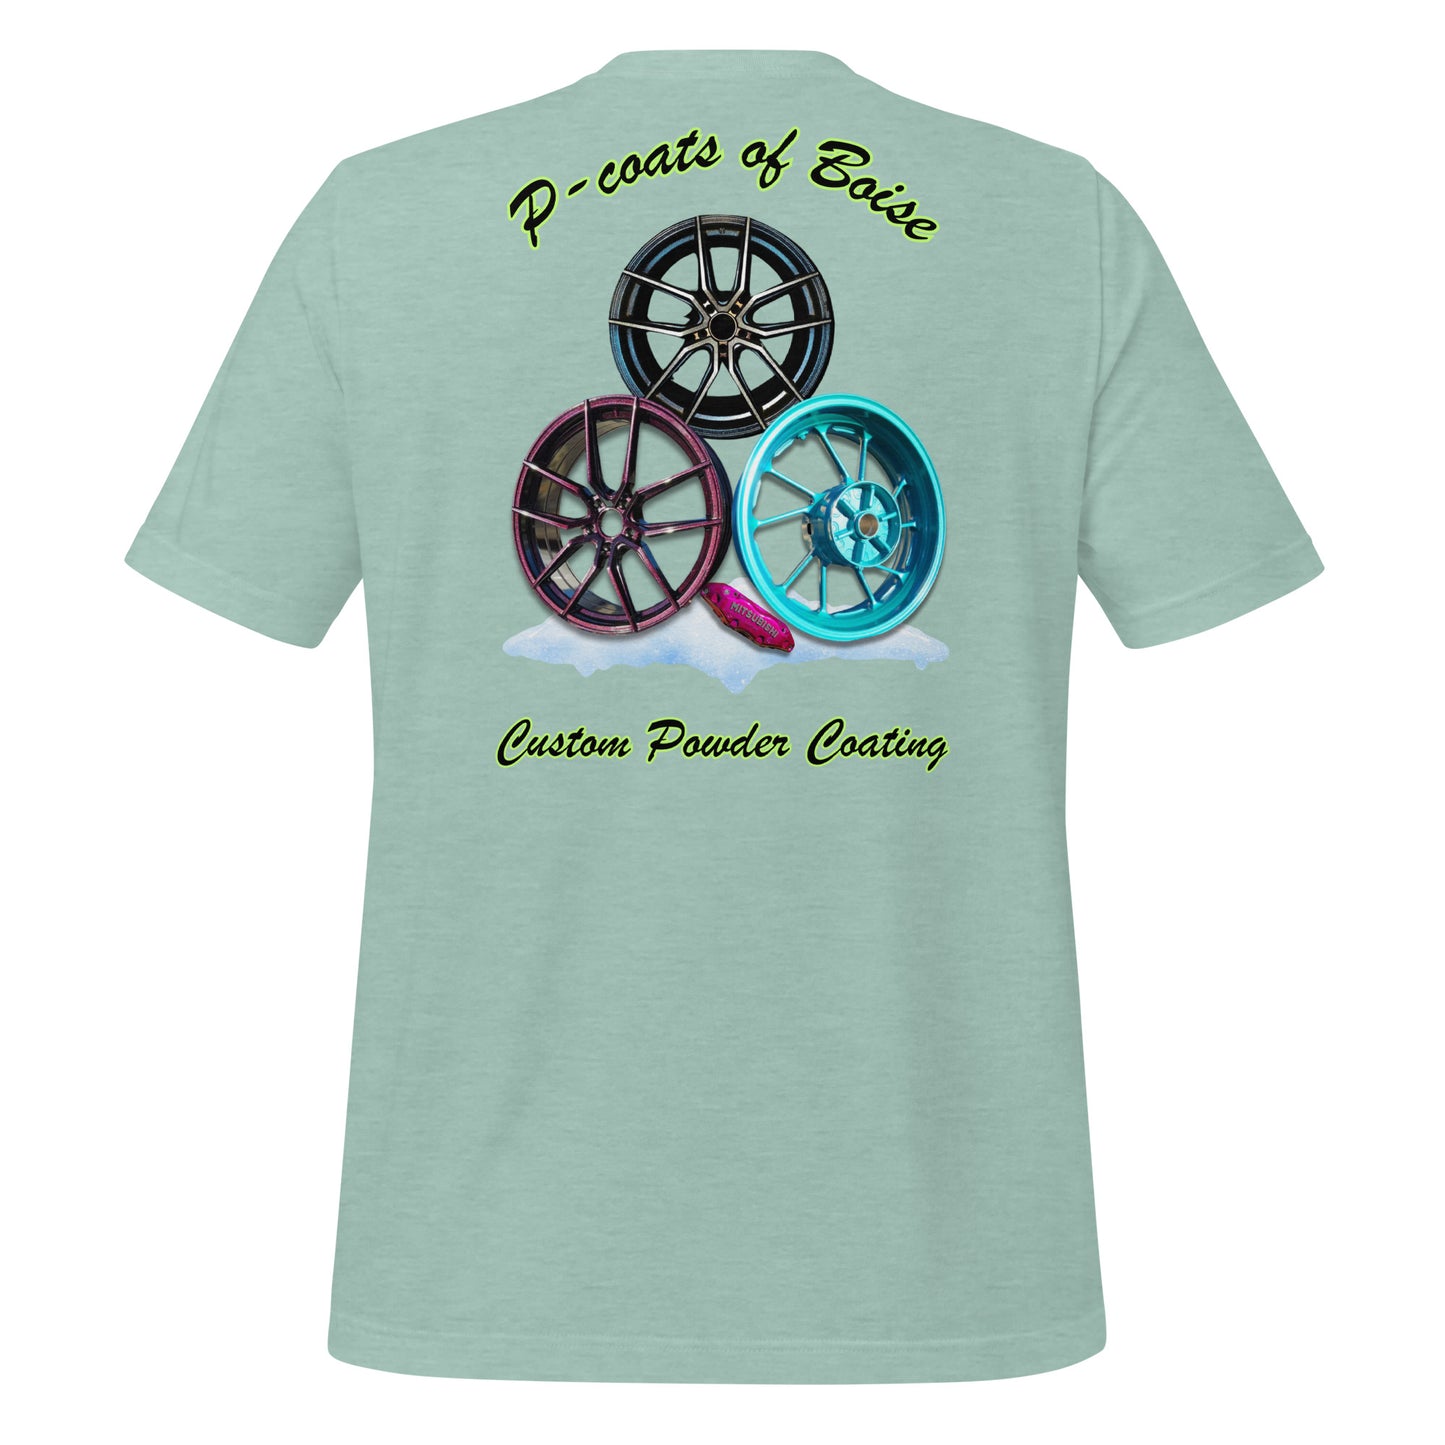 P-Coats of Boise 3 Wheel Design Unisex t-shirt